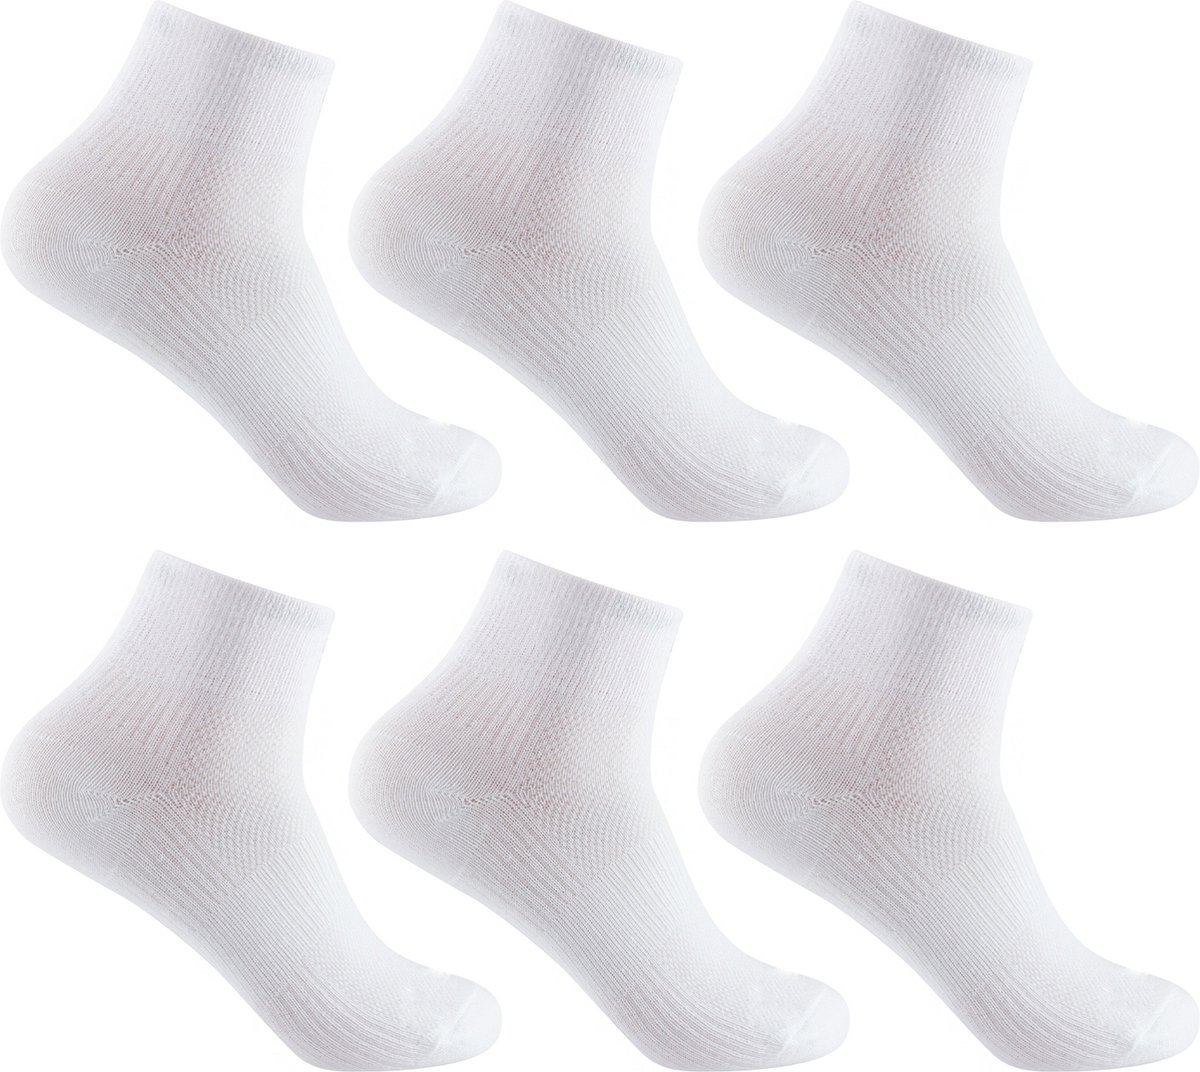 Sportsokken - Wit - 6 paar - maat 41-44.5 - Vitility High Comfort - sokken - wandelsokken